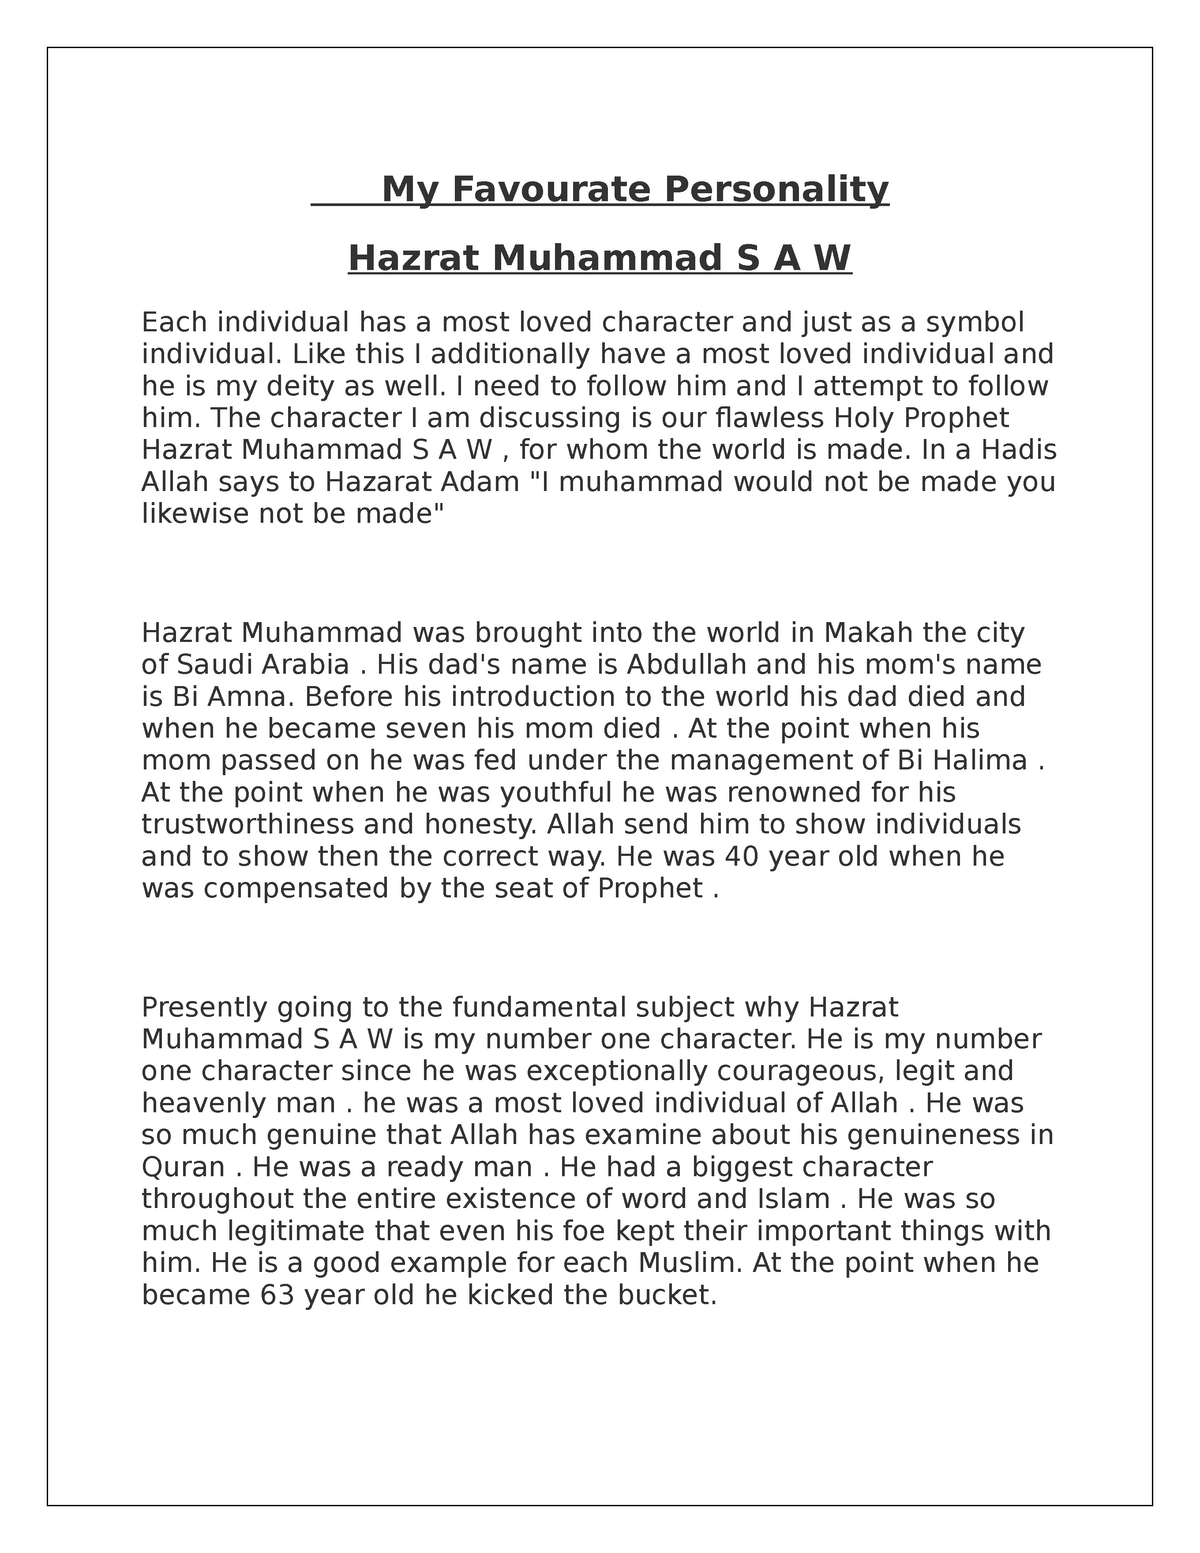 essay on my favorite personality hazrat muhammad saw